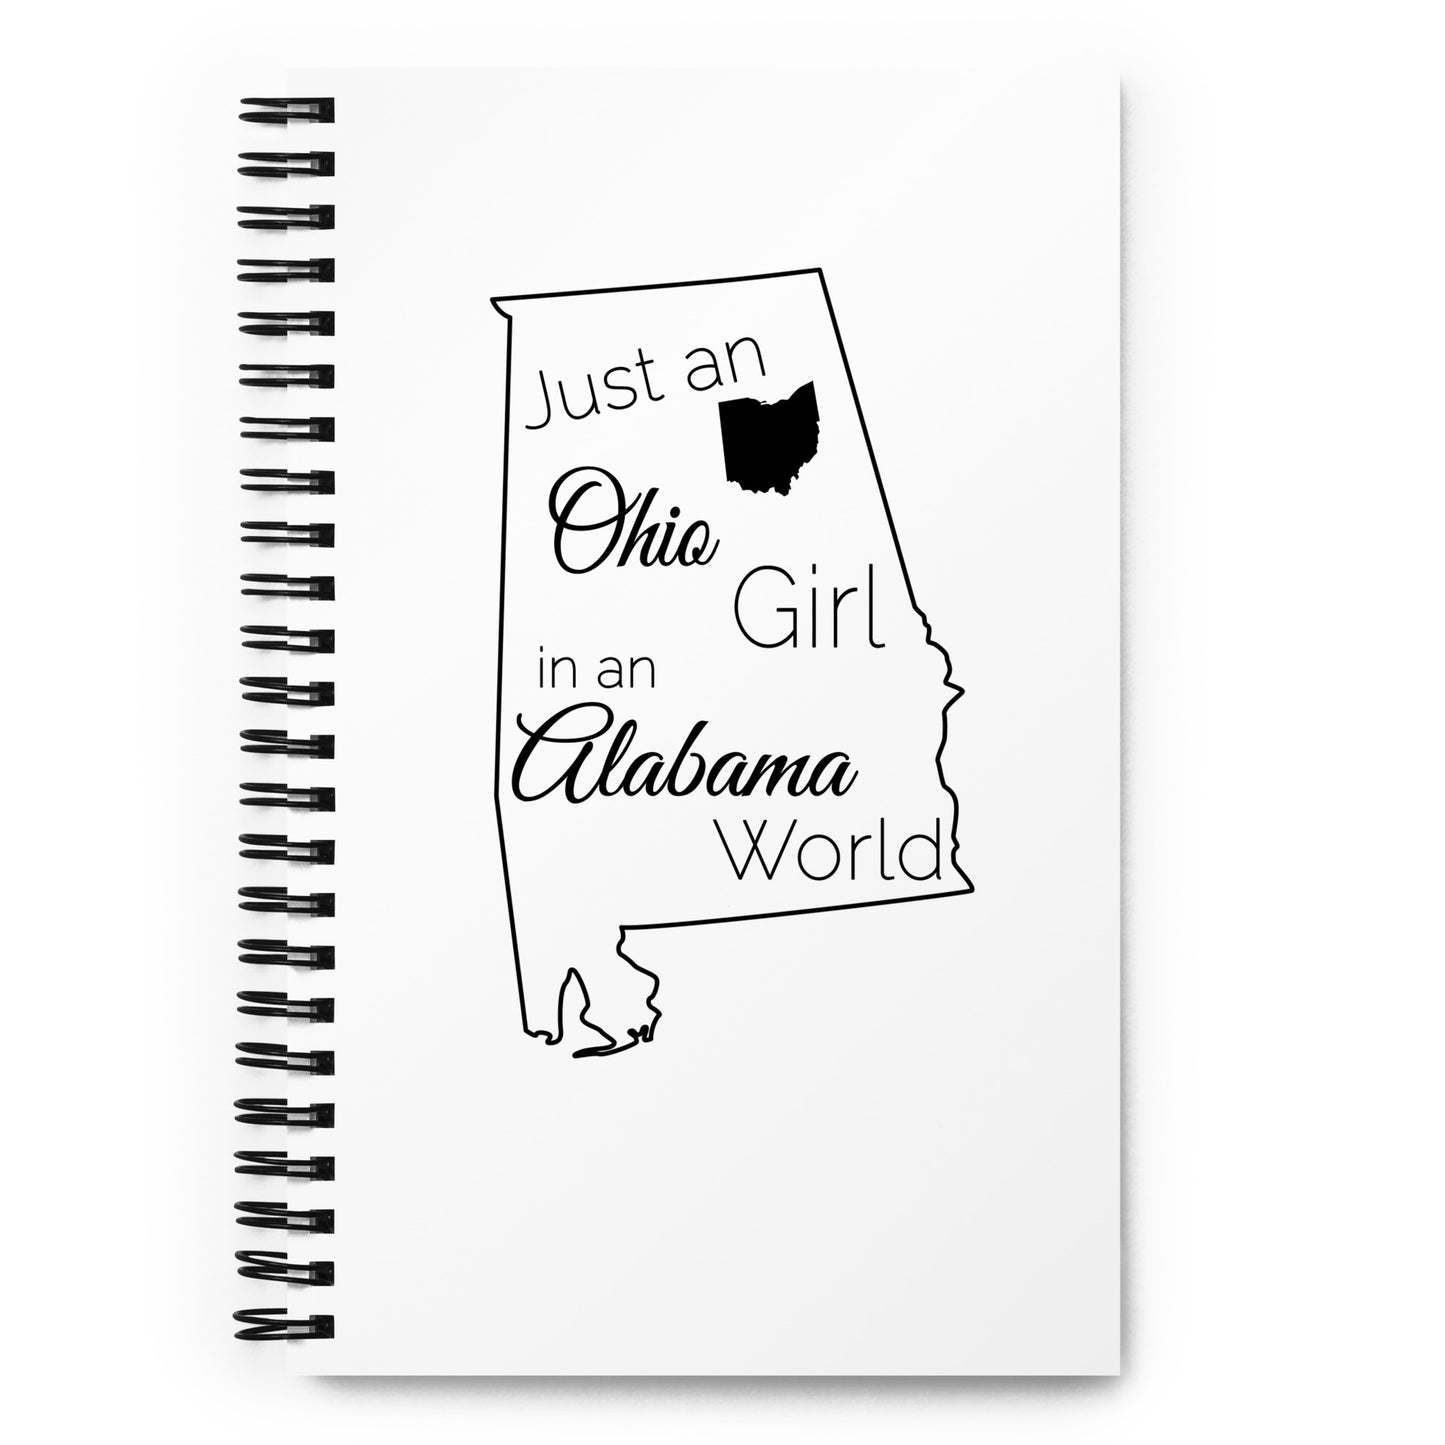 Just an Ohio Girl in an Alabama World Spiral notebook